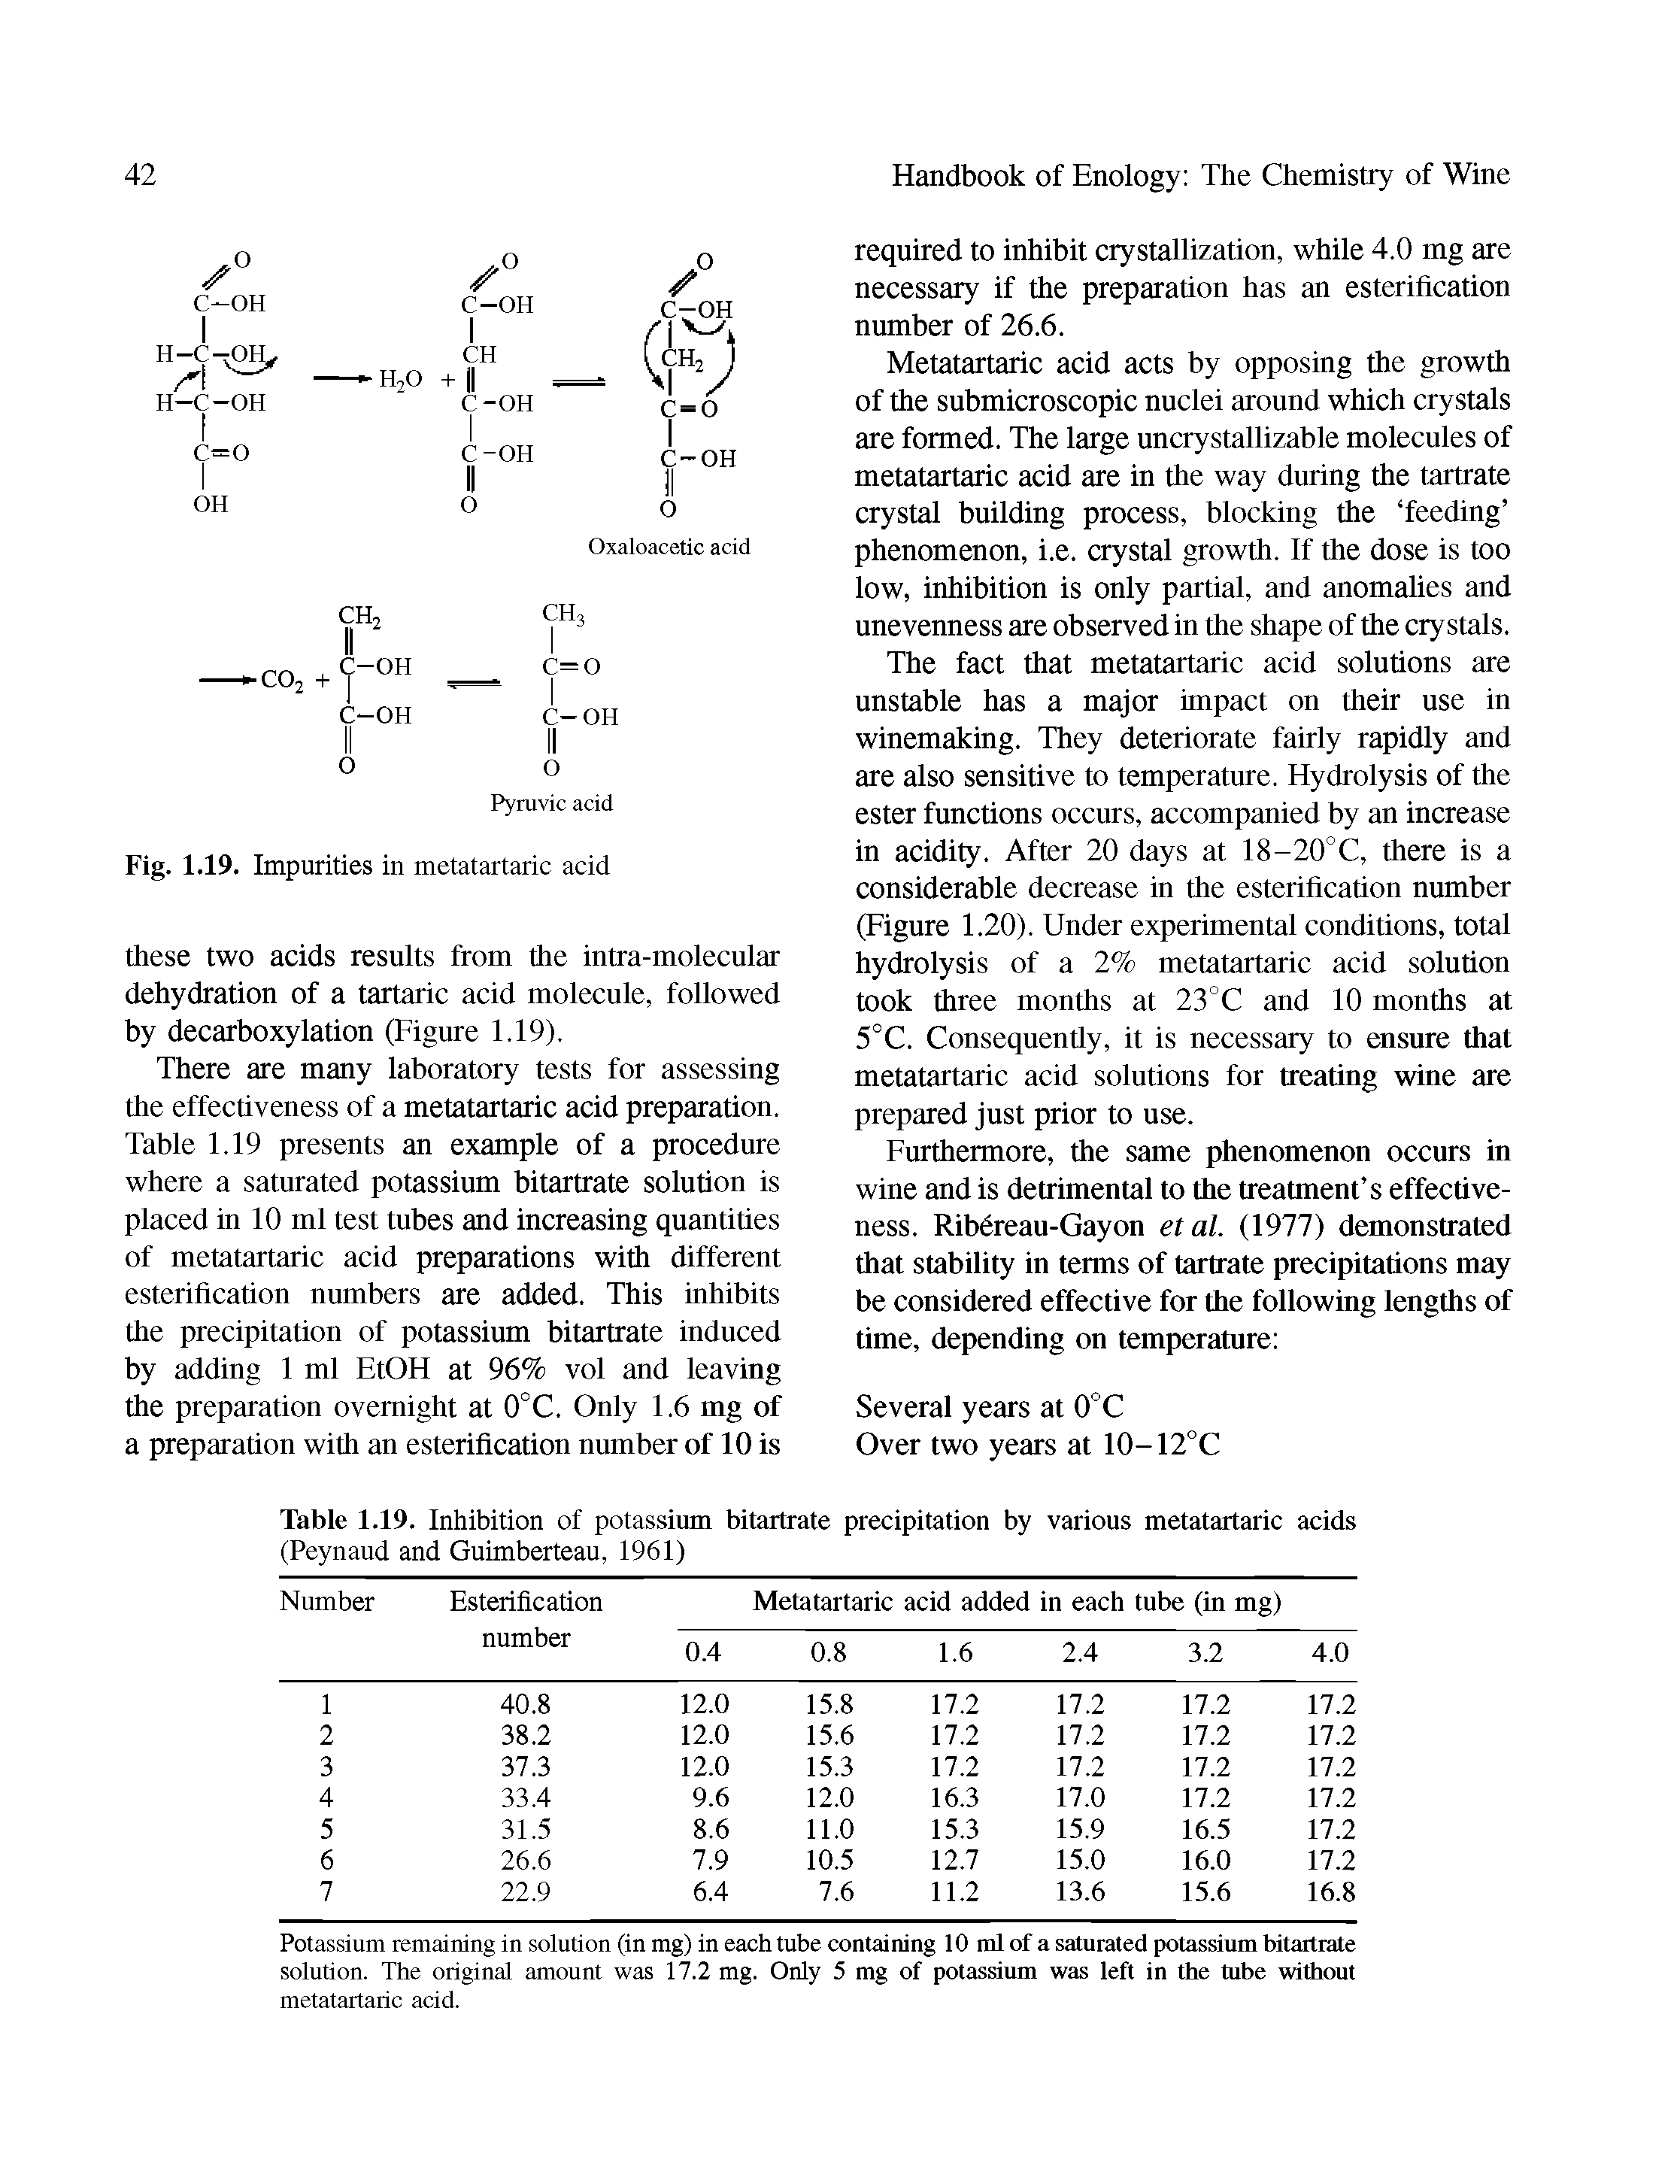 Table 1.19. Inhibition of potassium bitartrate precipitation by various metatartaric acids (Peynaud and Guimberteau, 1961)...